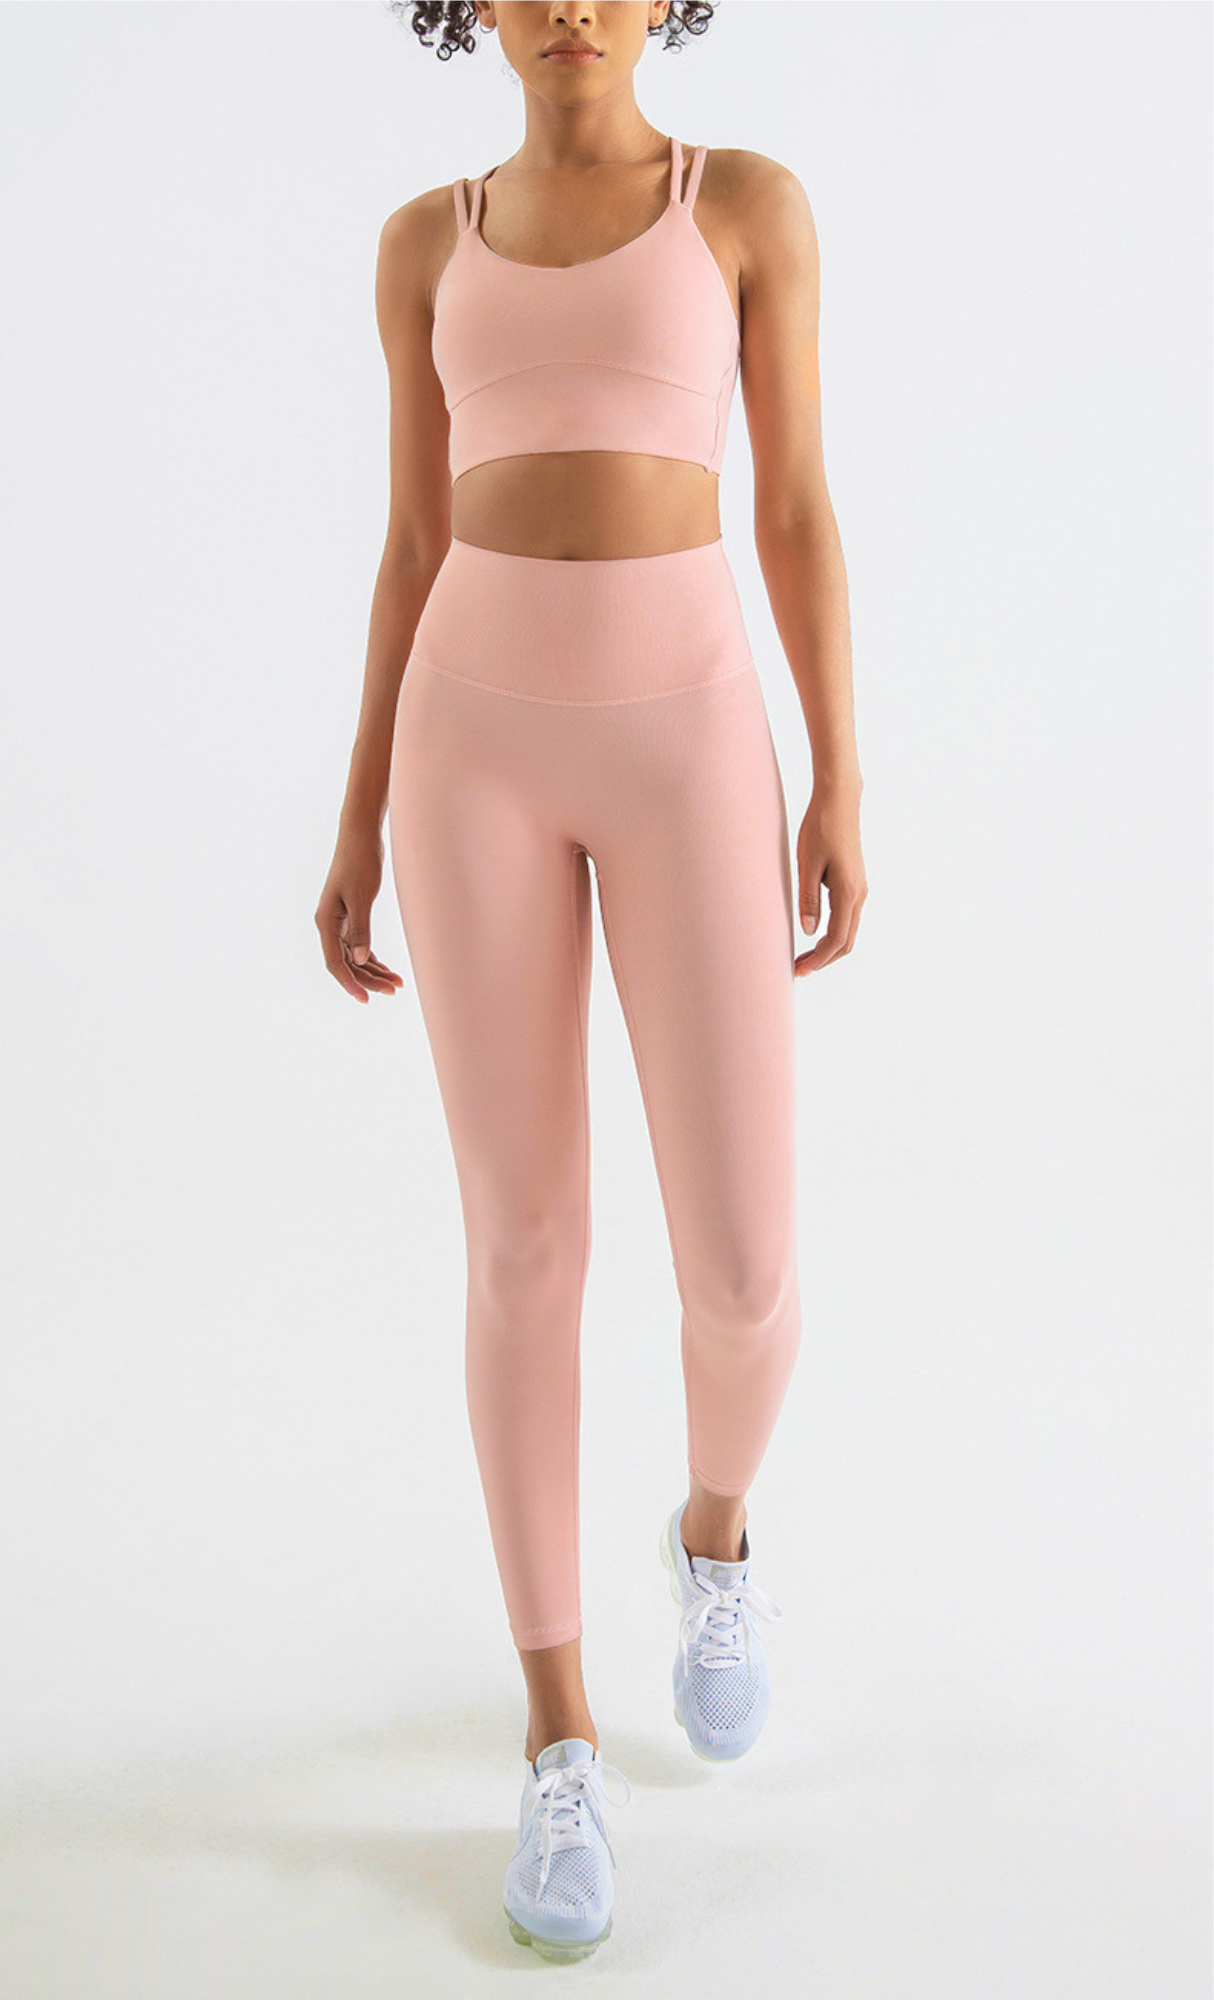 Tiktok Leggings for Women (Pink), Butt Lifting High Waist Yoga Pants, Tummy  Control Scrunch Workout Running Booty Tights, XL Size - Walmart.com